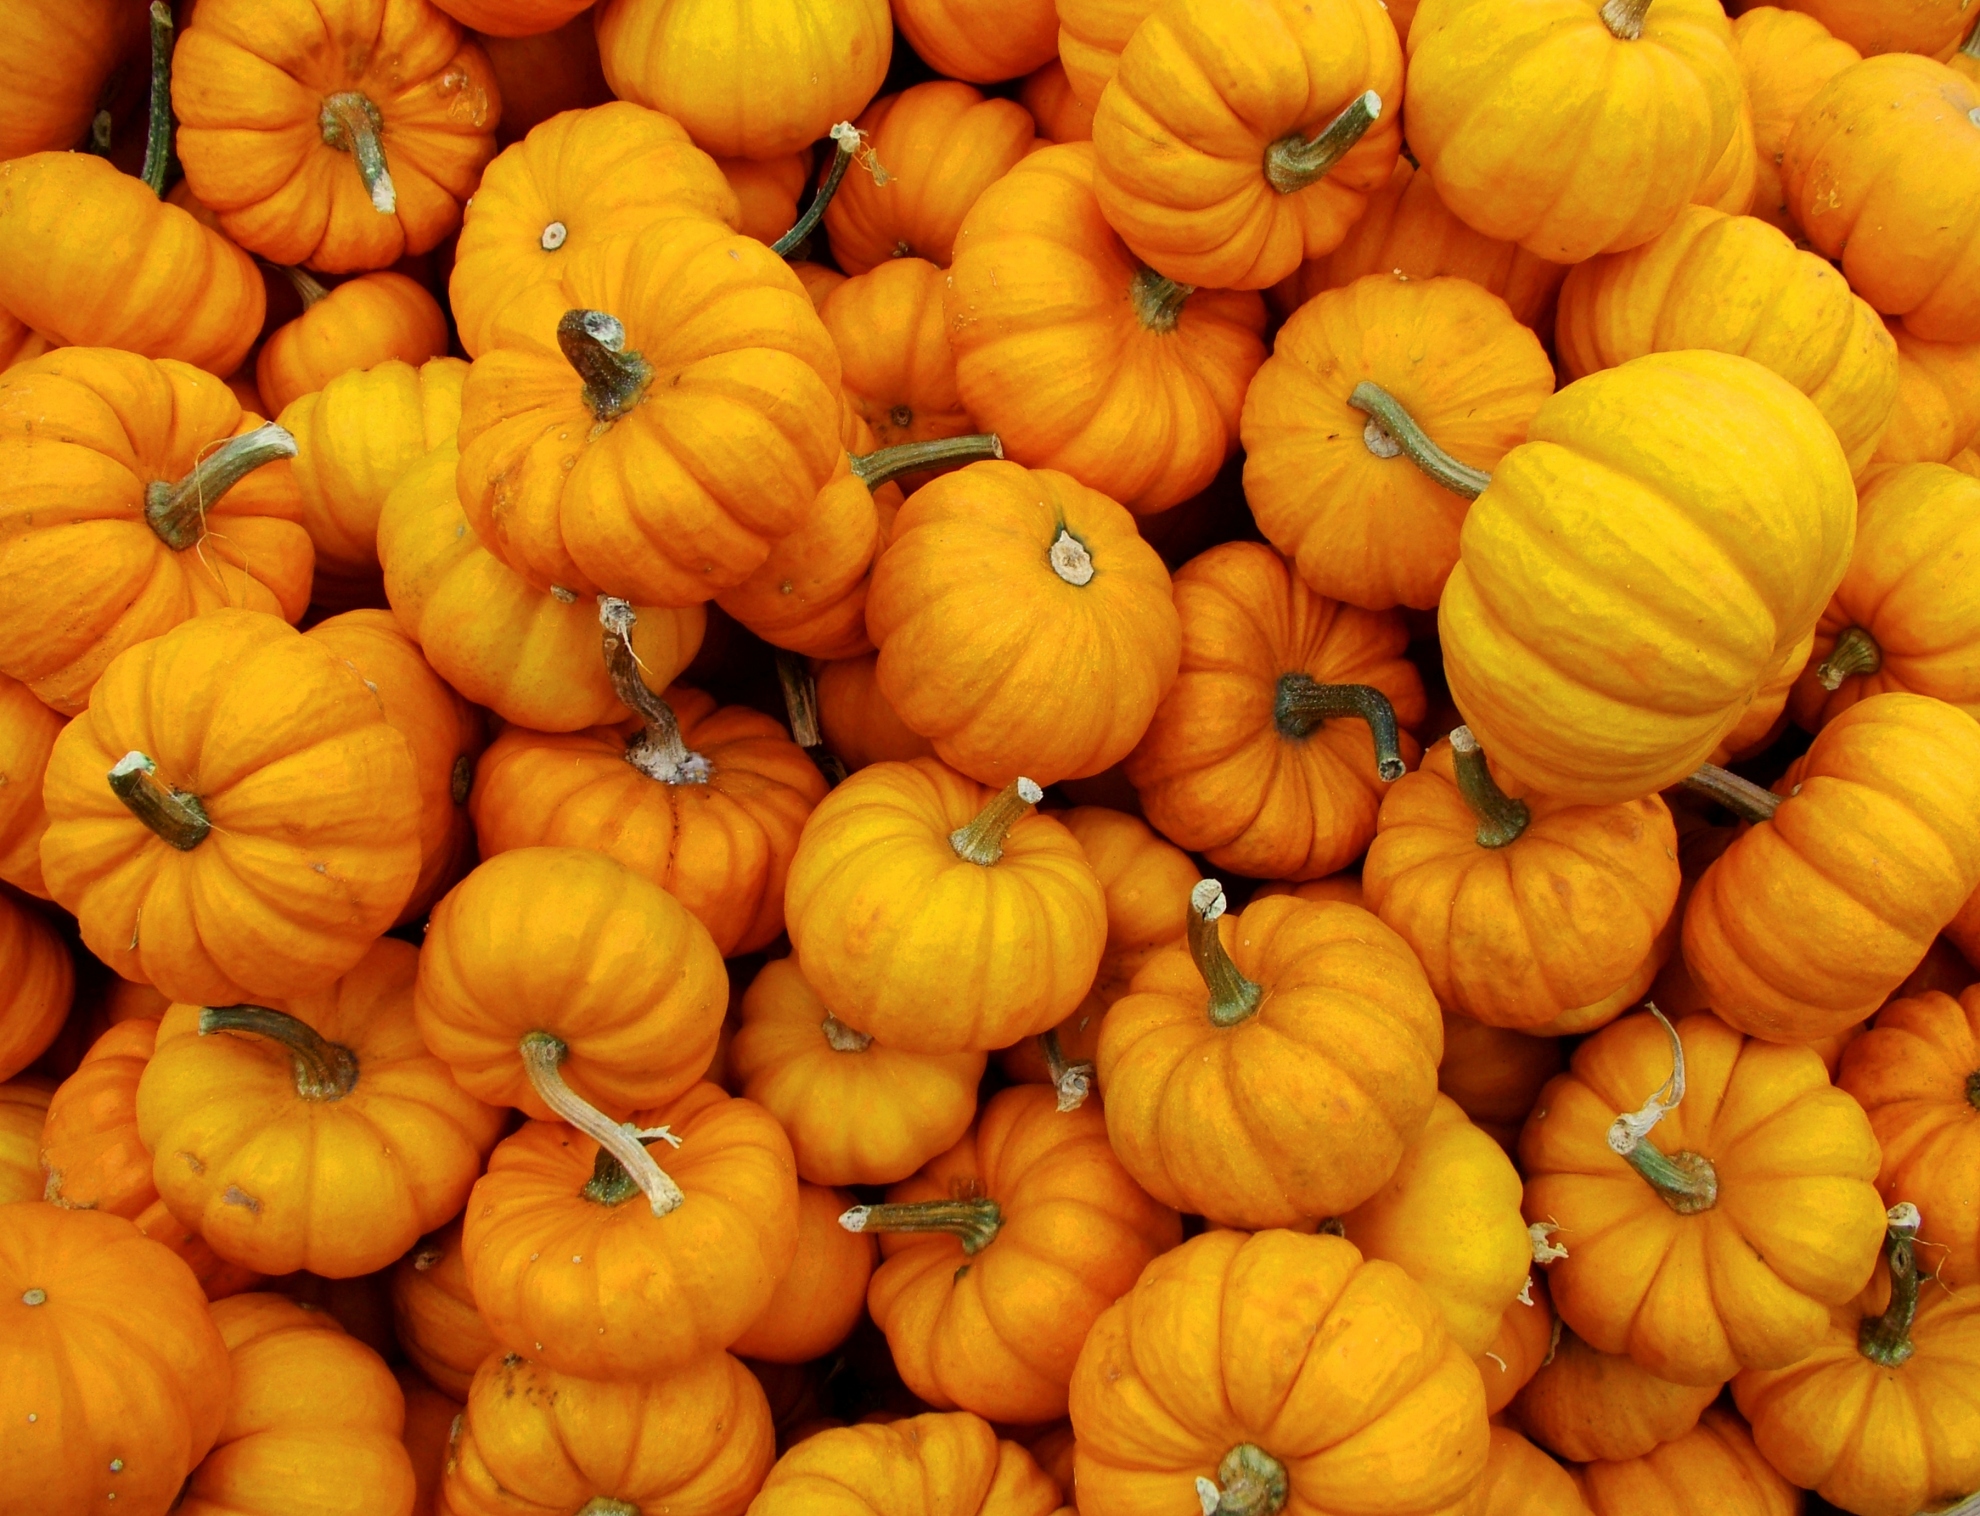 A pile of pumpkins.